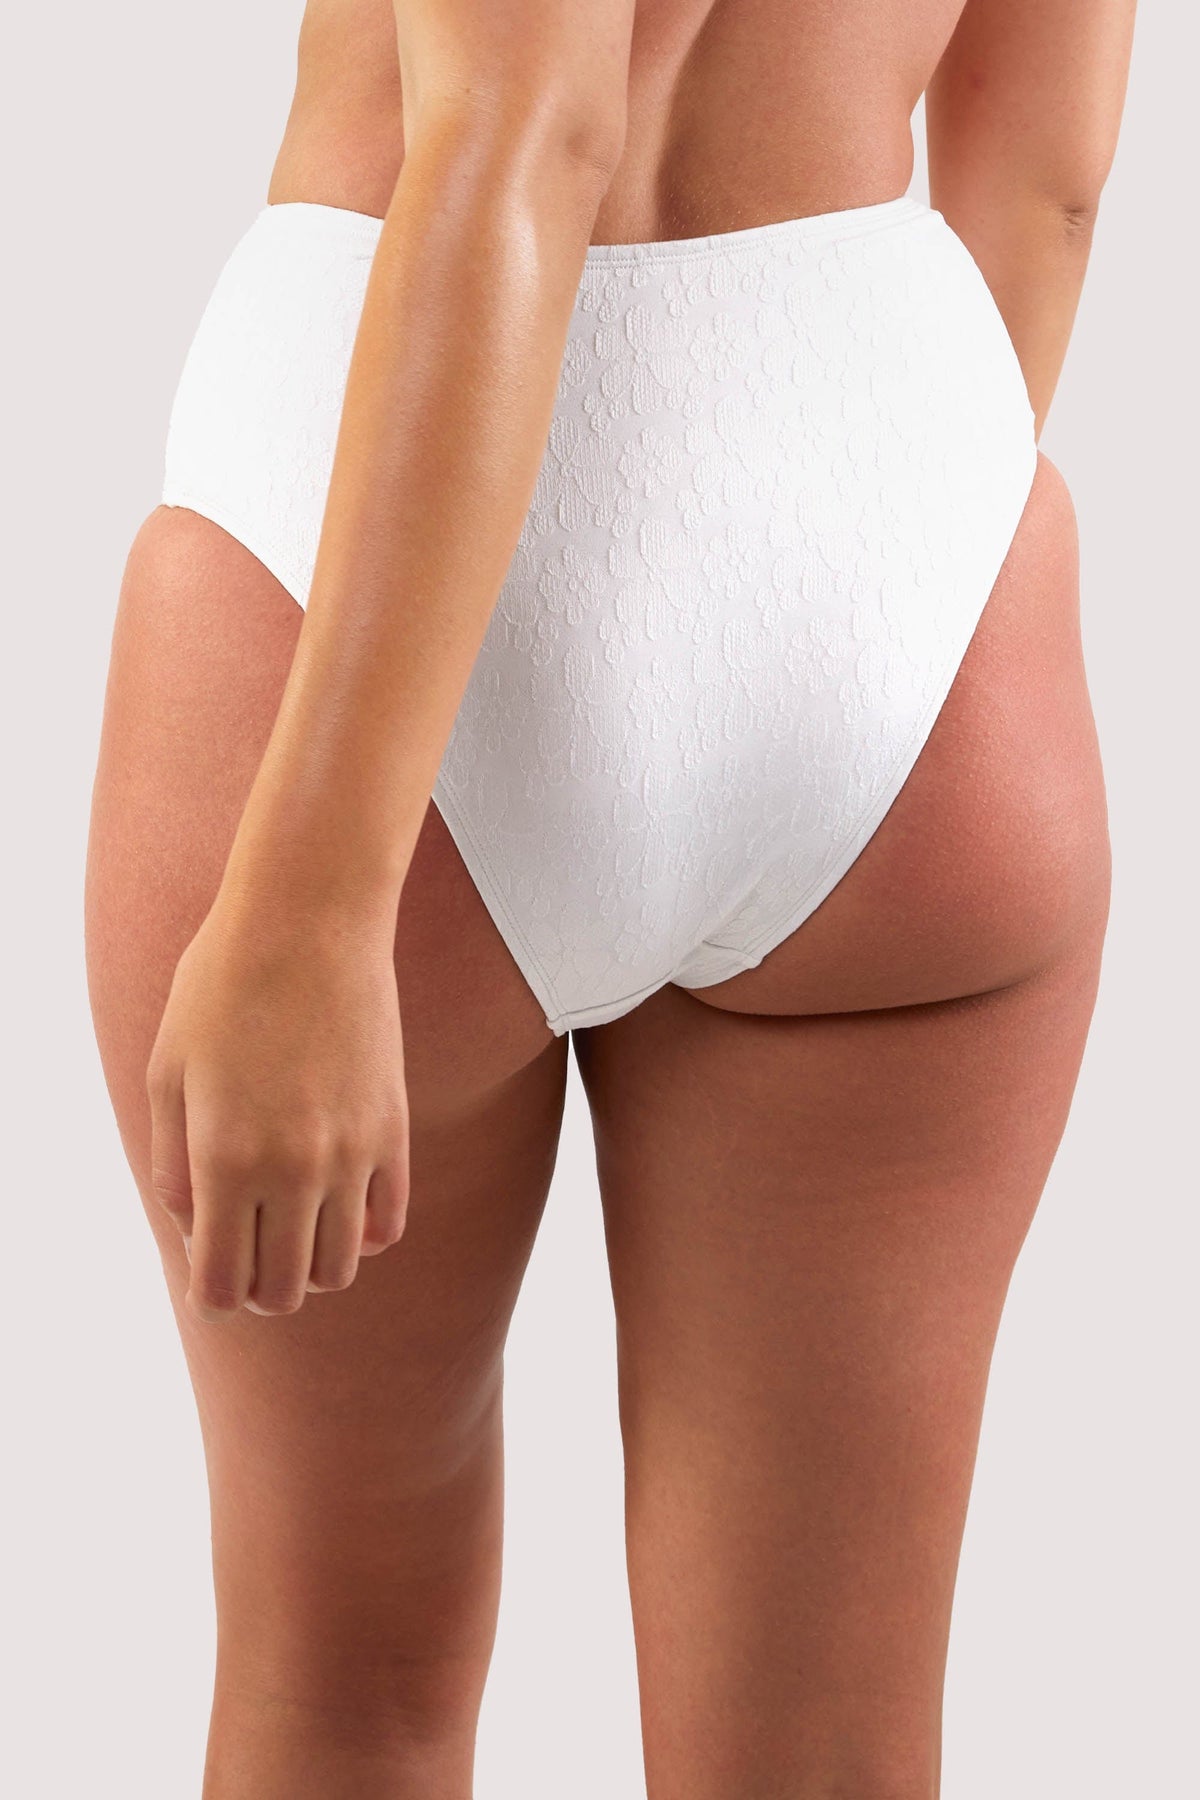 Model shows full brief of white floral texture high waist bikini bottoms